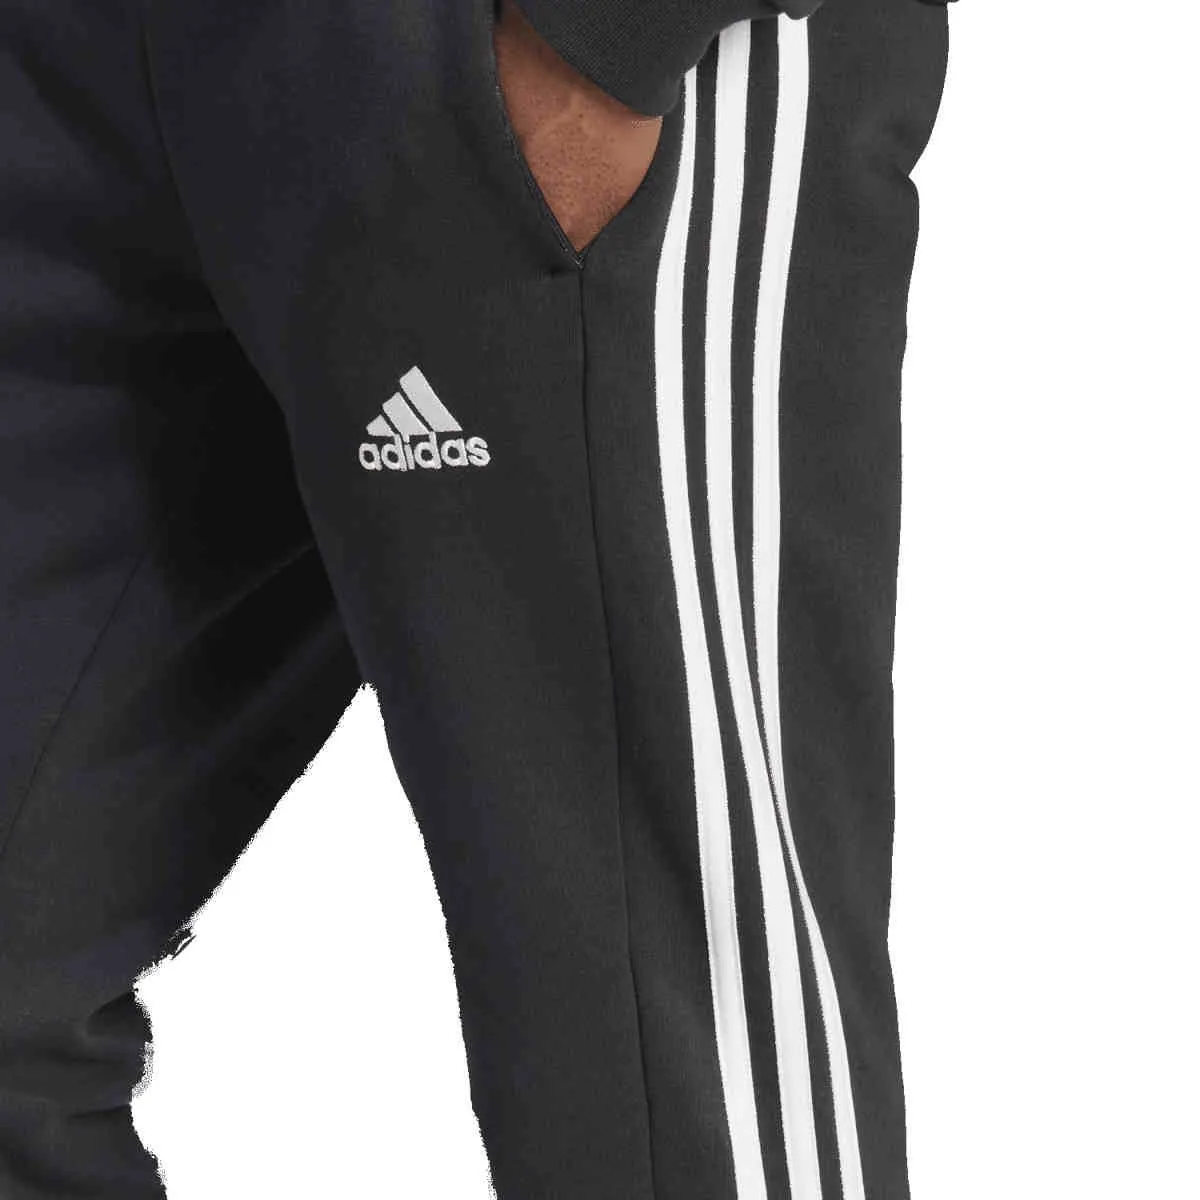 adidas Jogginghose 3S schwarz slim fit